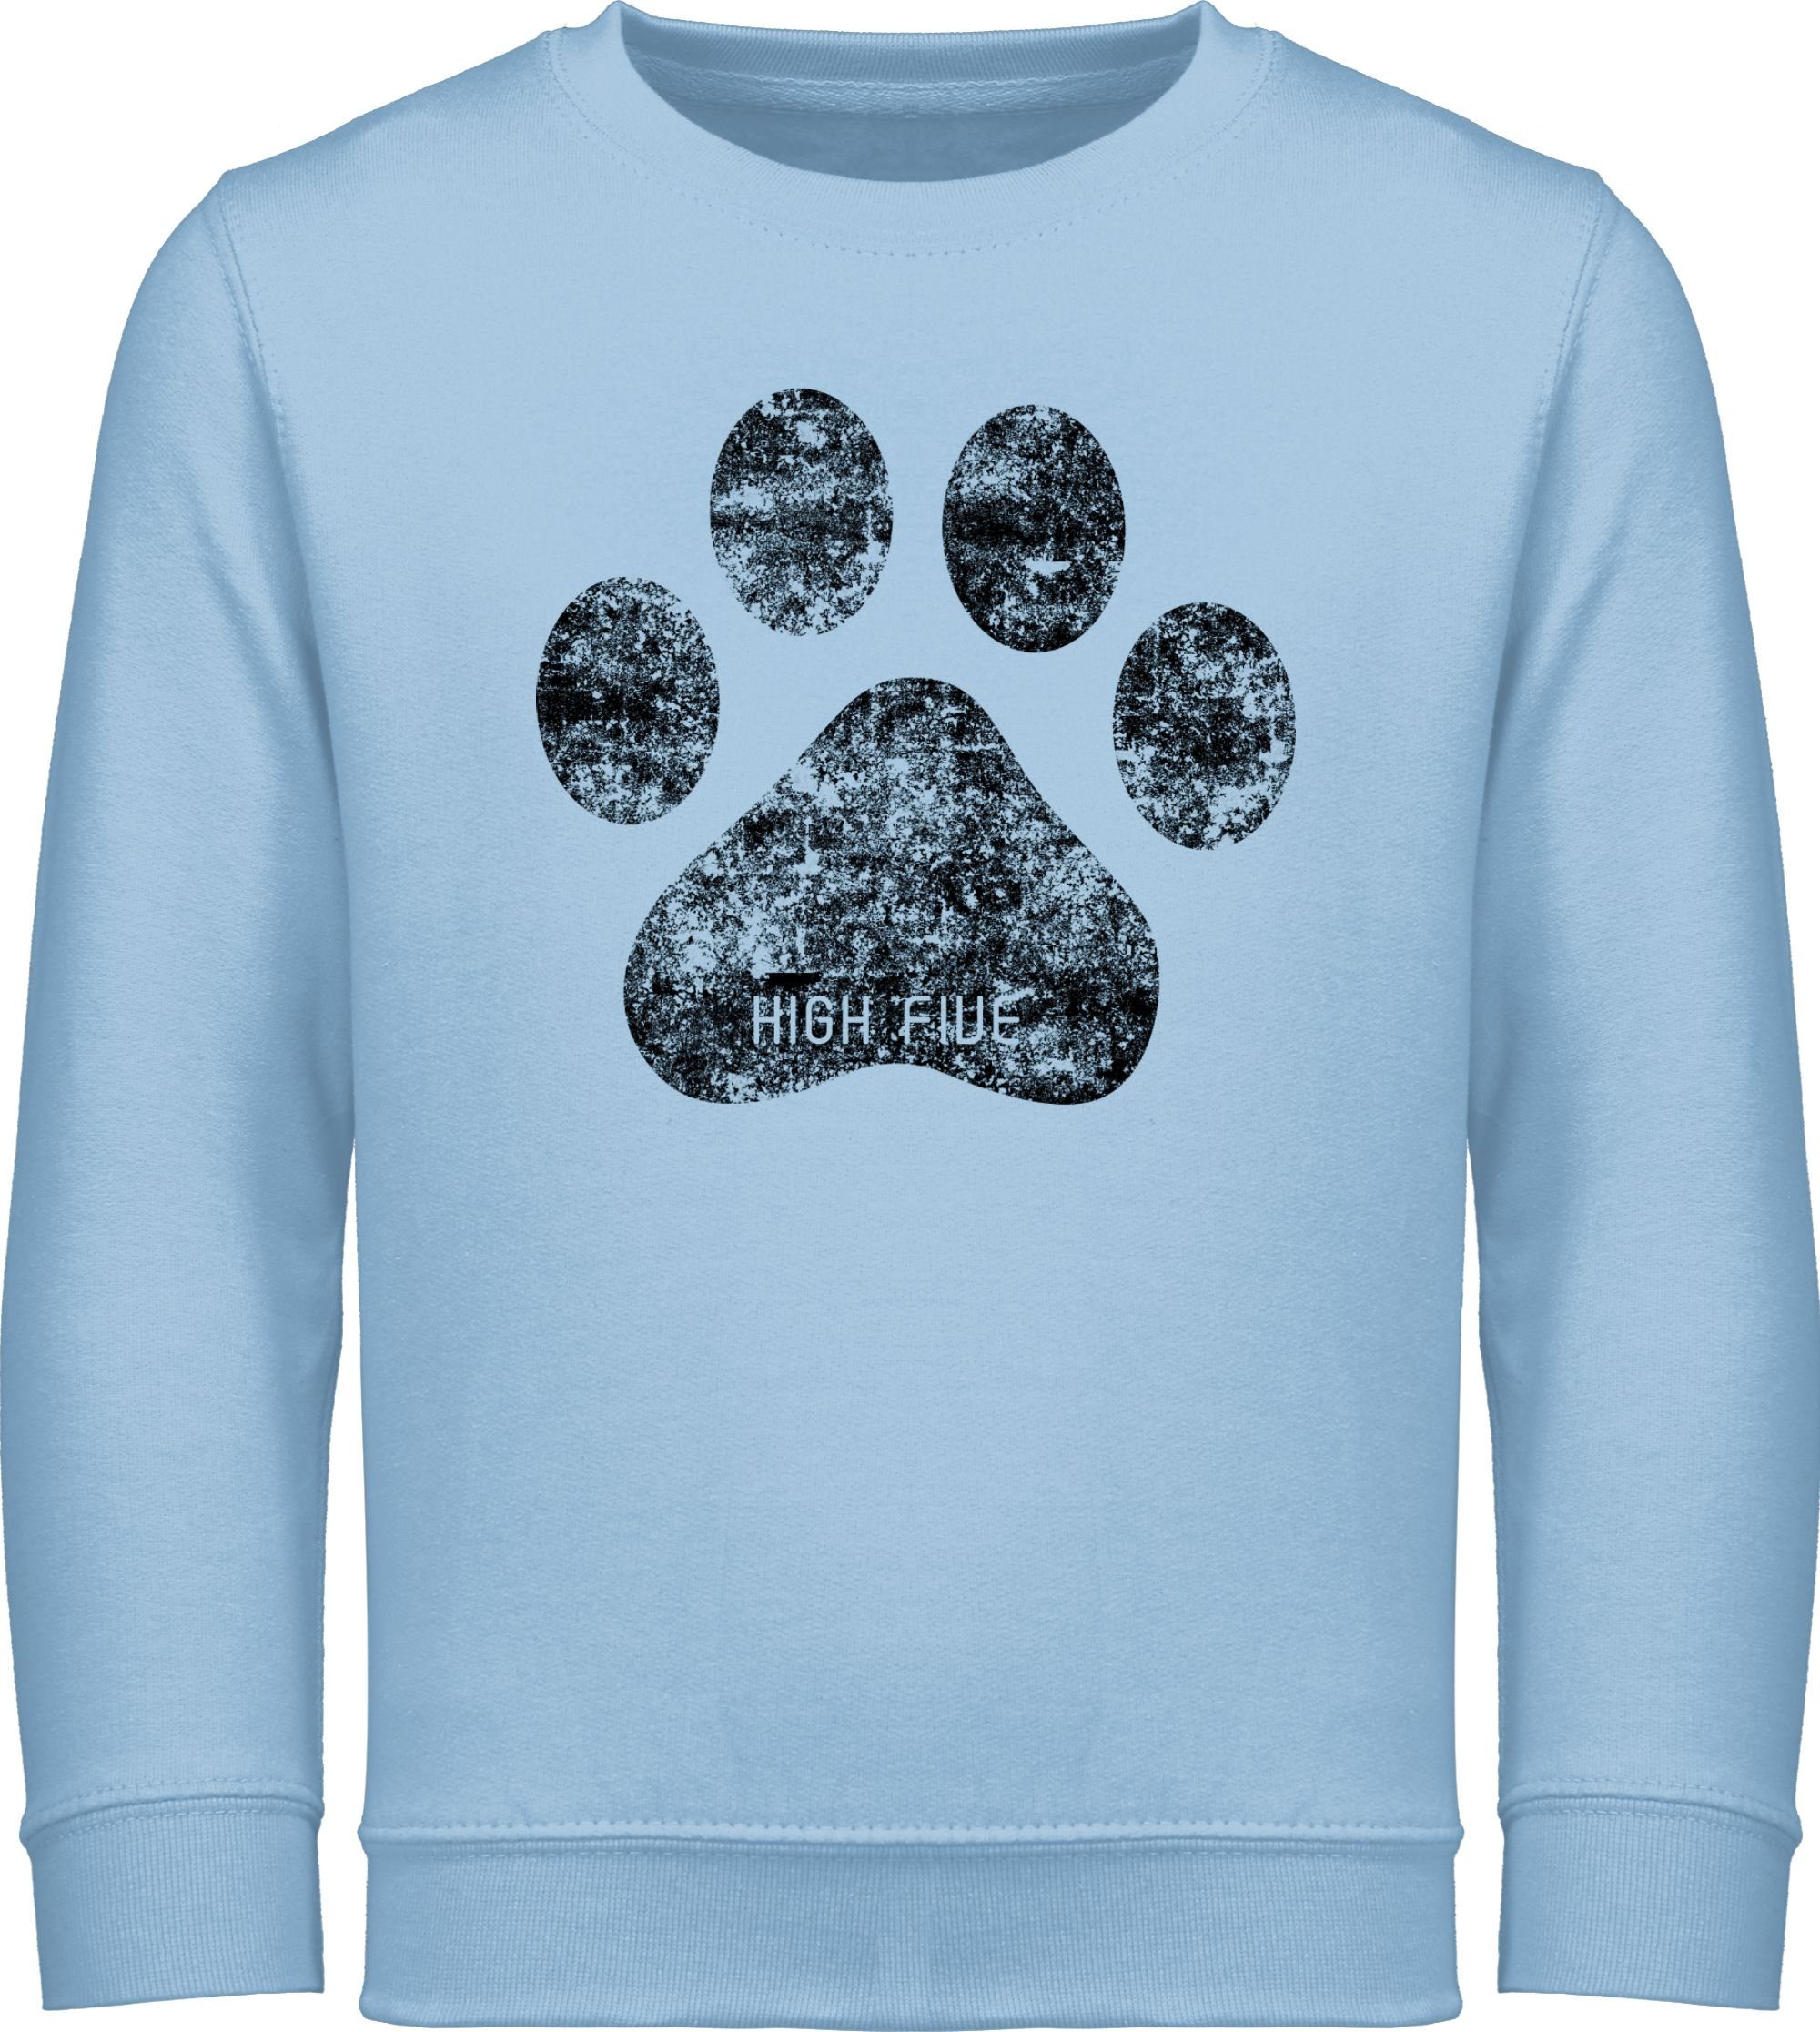 Shirtracer Sweatshirt High Five Hunde Pfote Tiermotiv Animal Print 1 Hellblau